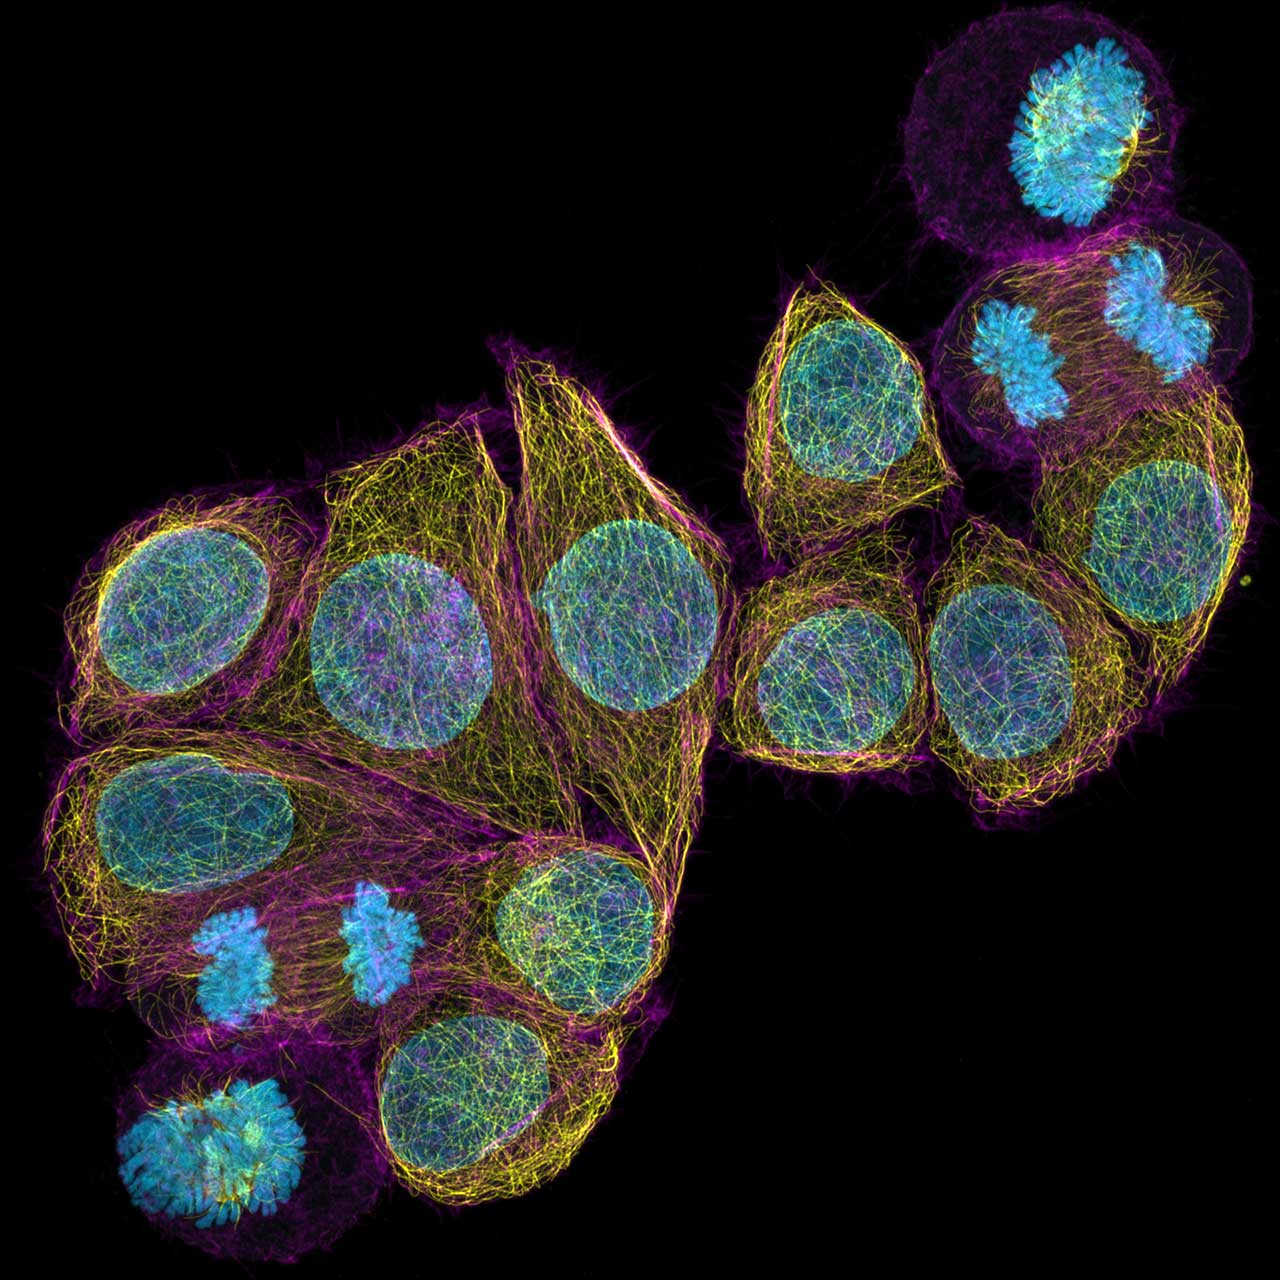 Super-resolution image of a large field of view of HeLa cells. Courtesy of A. Politi, J. Jakobi and P. Lenart, MPI for Biophysical Chemistry, Göttingen, Germany.